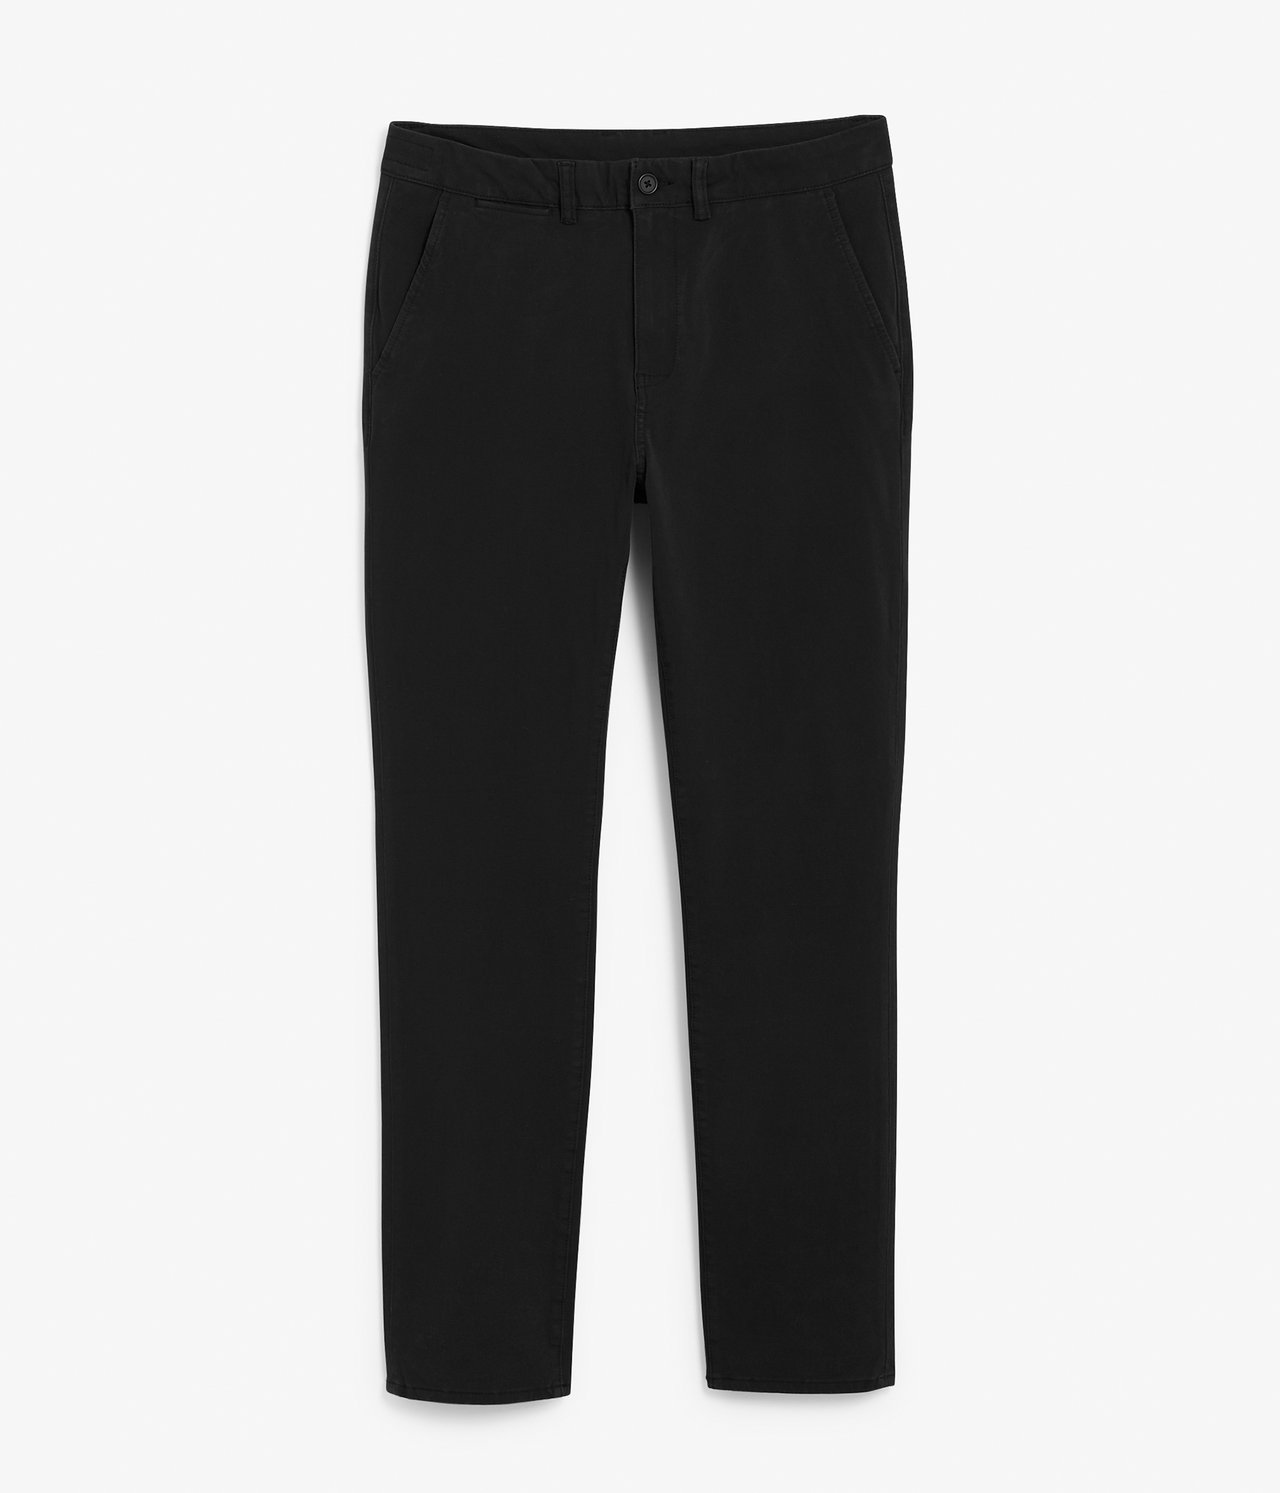 Spodnie Chinos regular fit - Czarne - 5